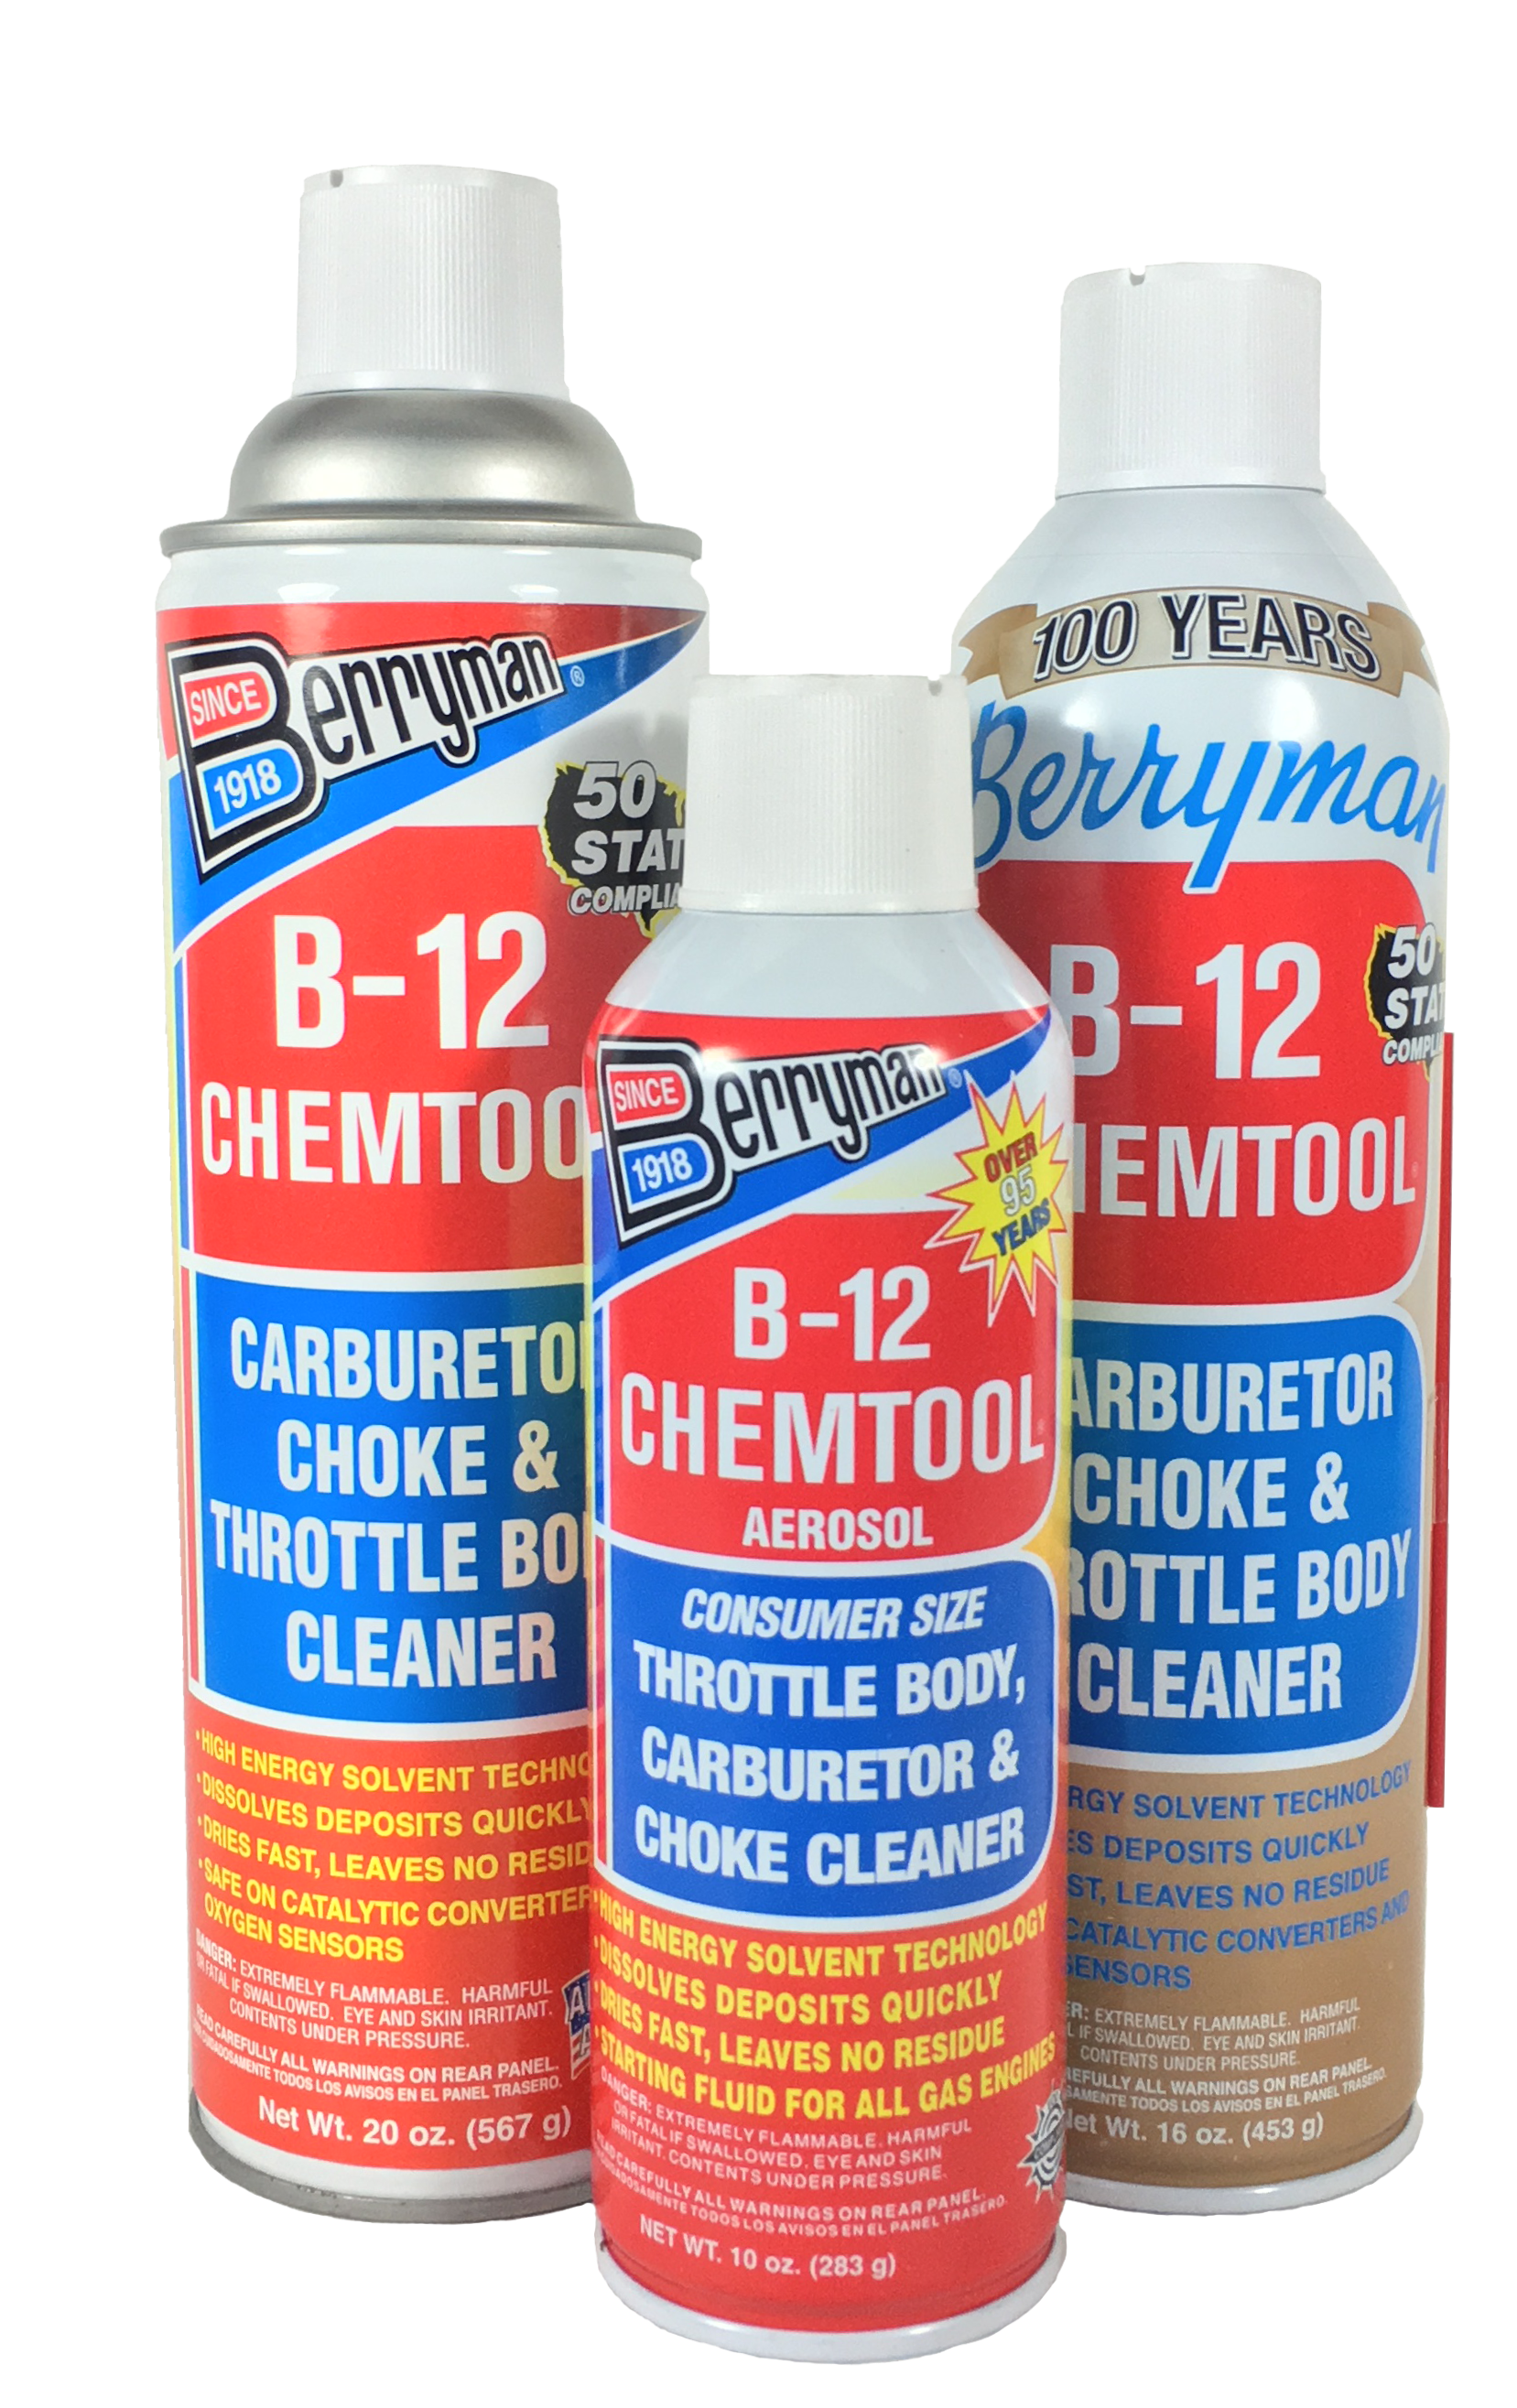 Berryman® B-12 Chemtool® Carburetor, Choke & Throttle Body Cleaner